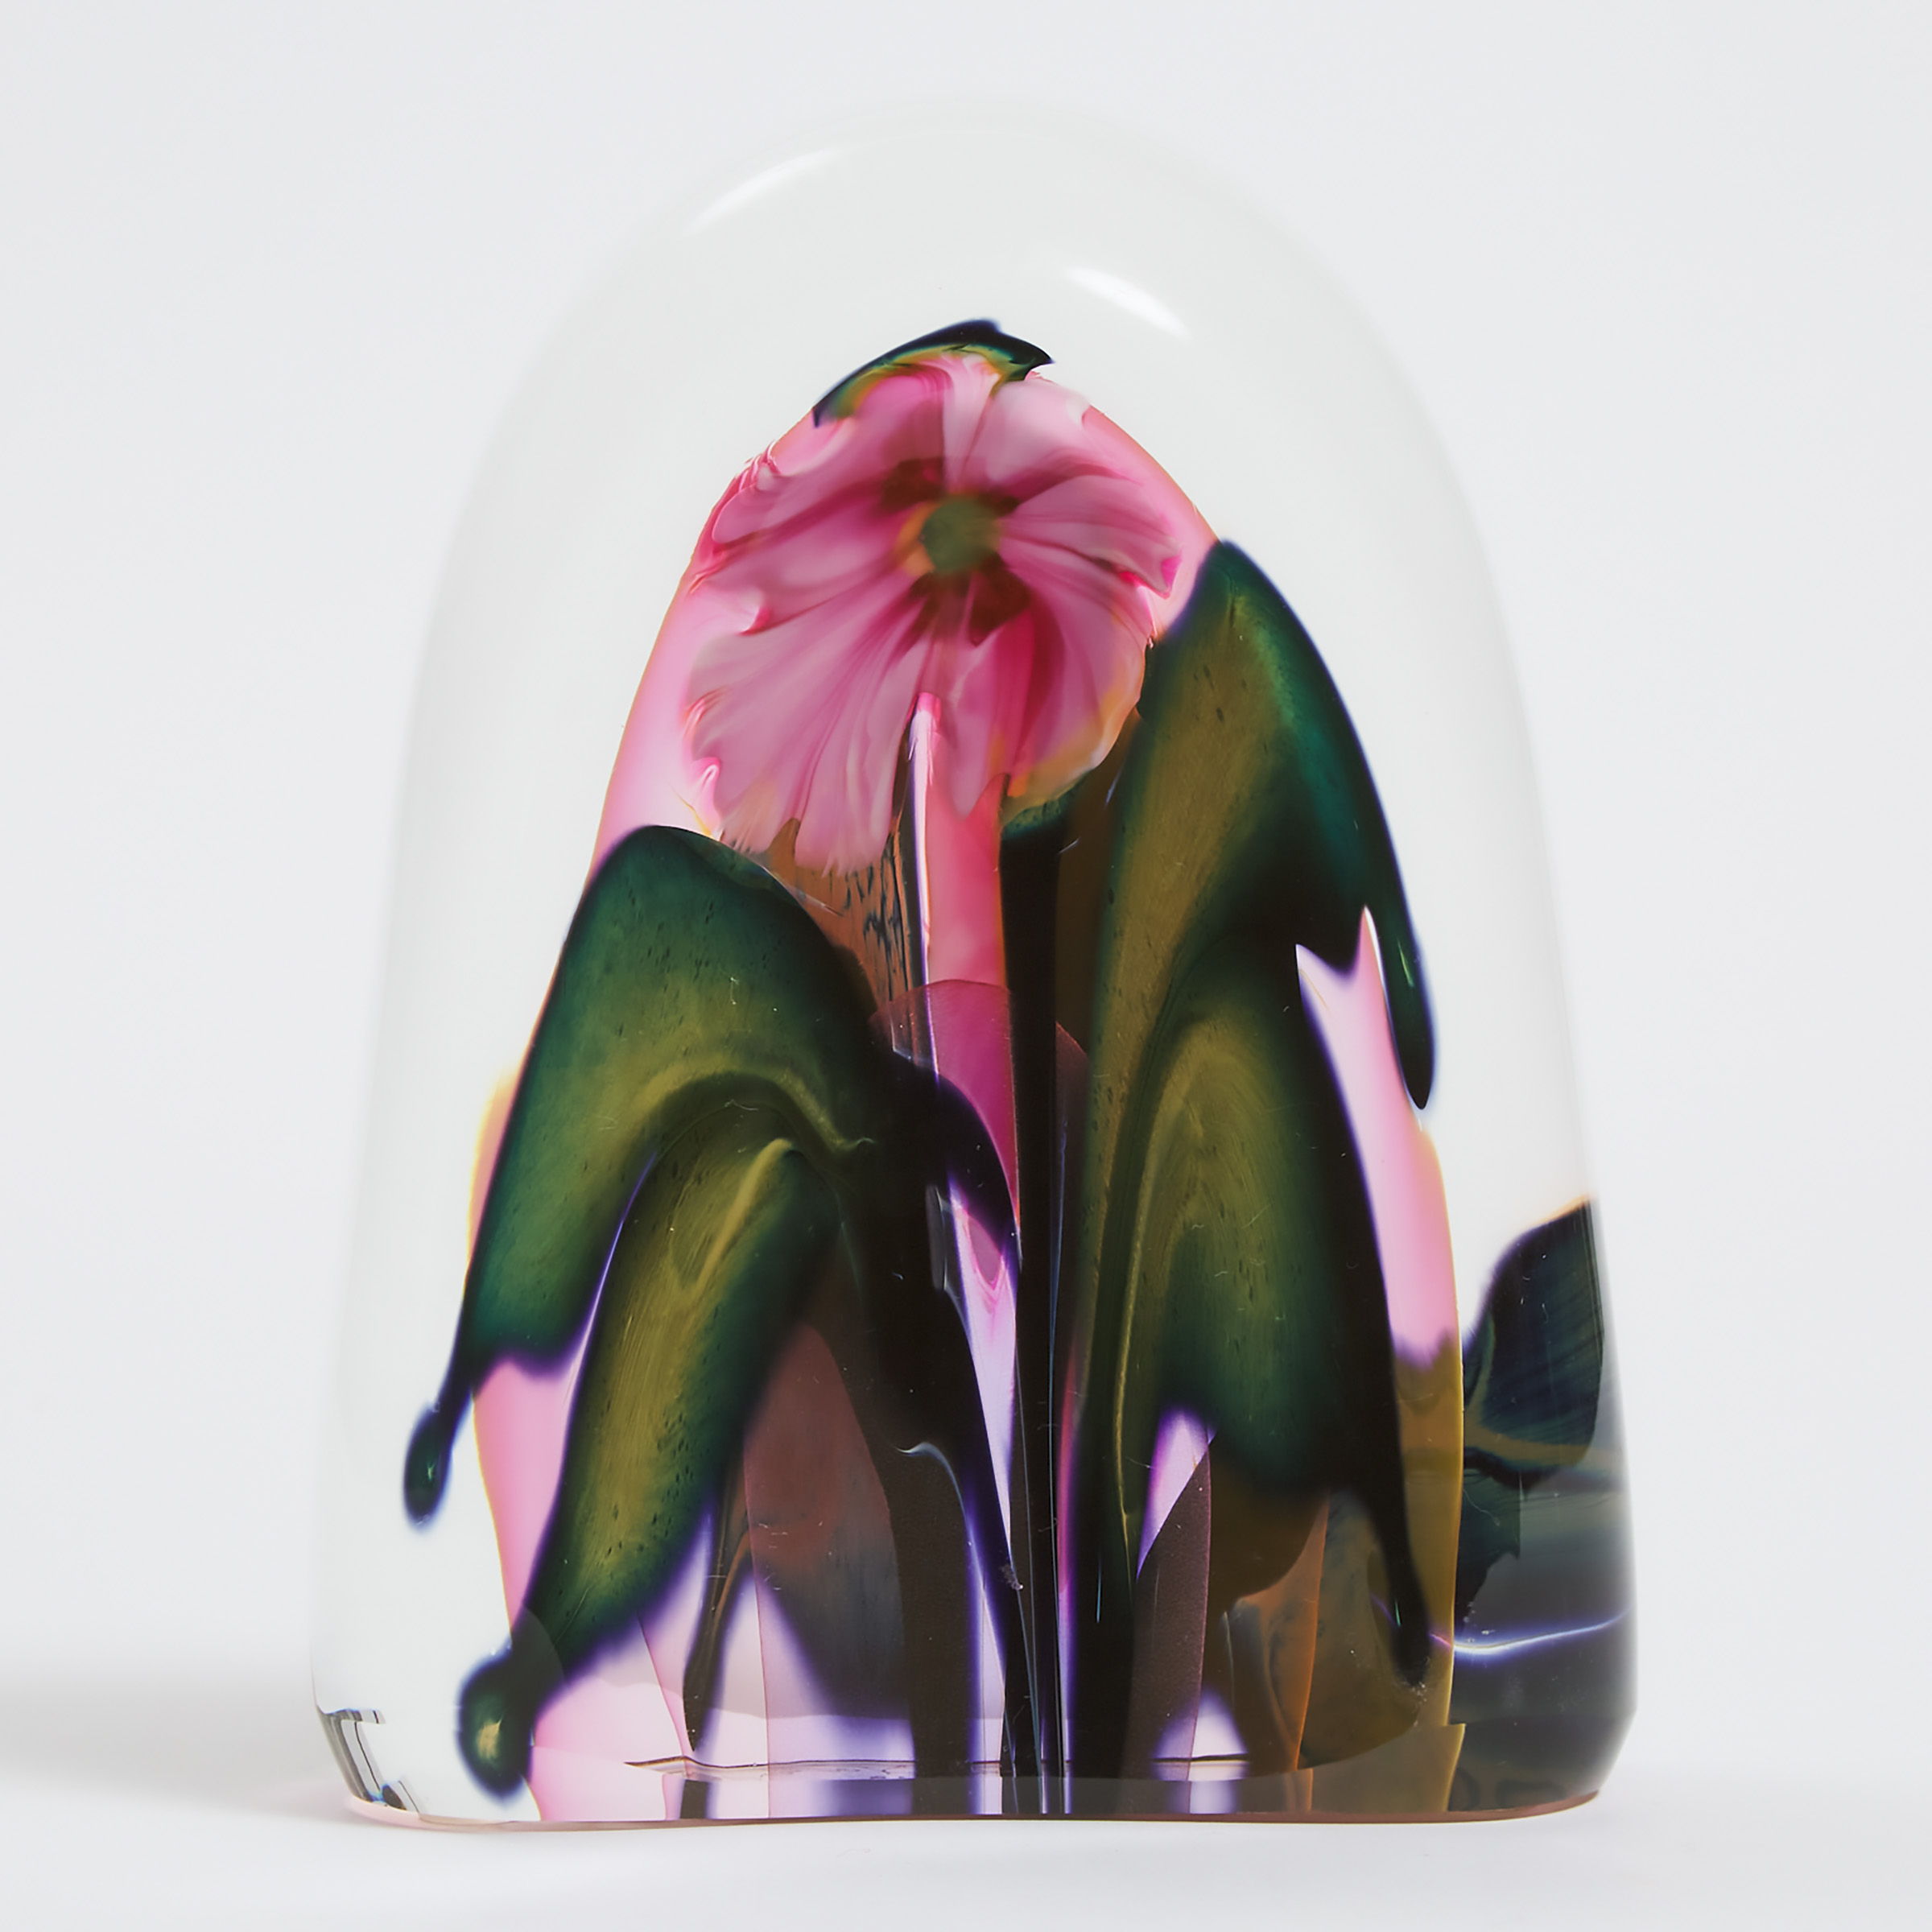 Charles Lotton (American, 1935-2021), 'Multi Flora' Glass Sculpture, 2010